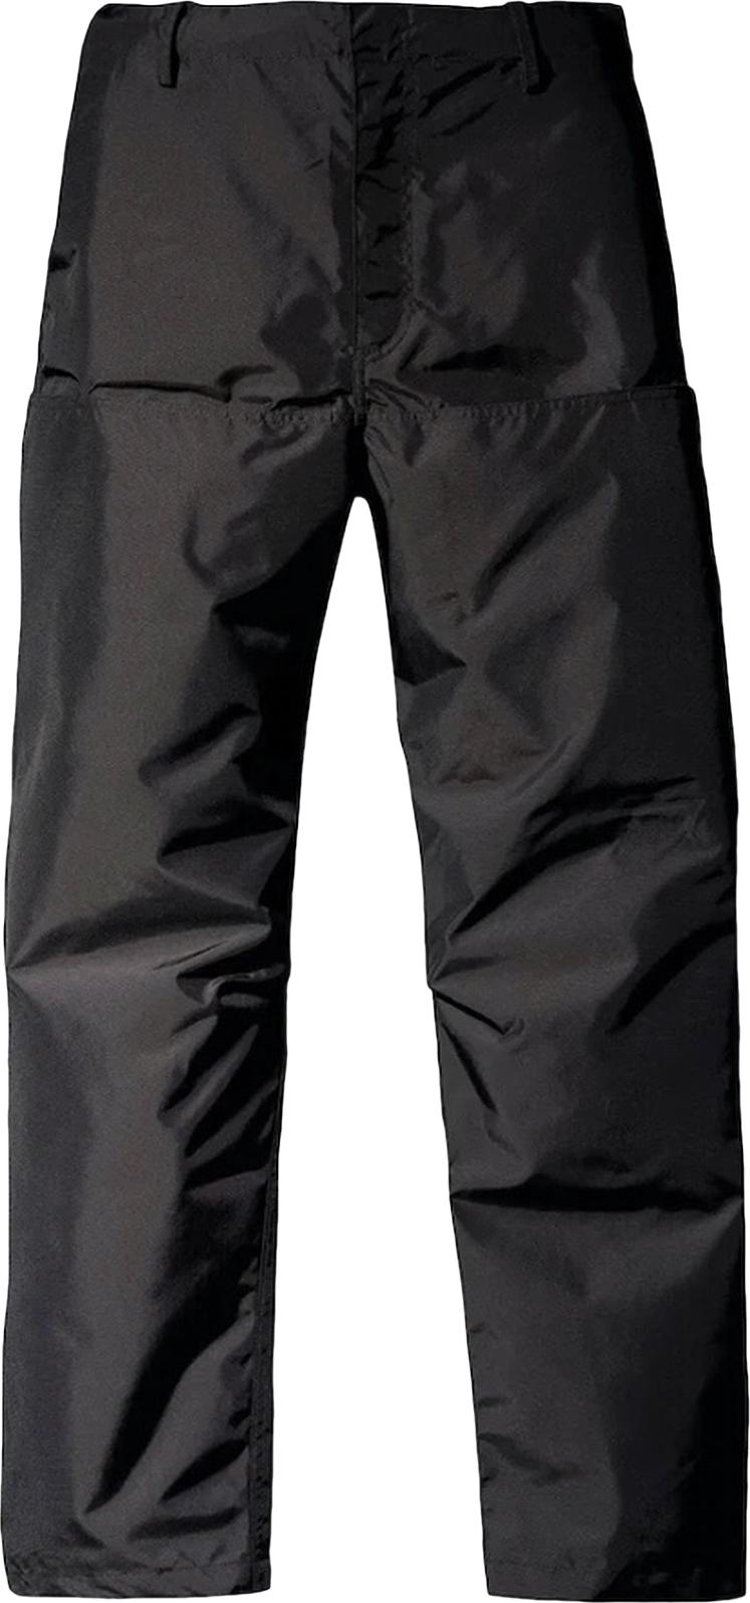 Yeezy Gap Engineered by Balenciaga Cargo Pants 'True Black'